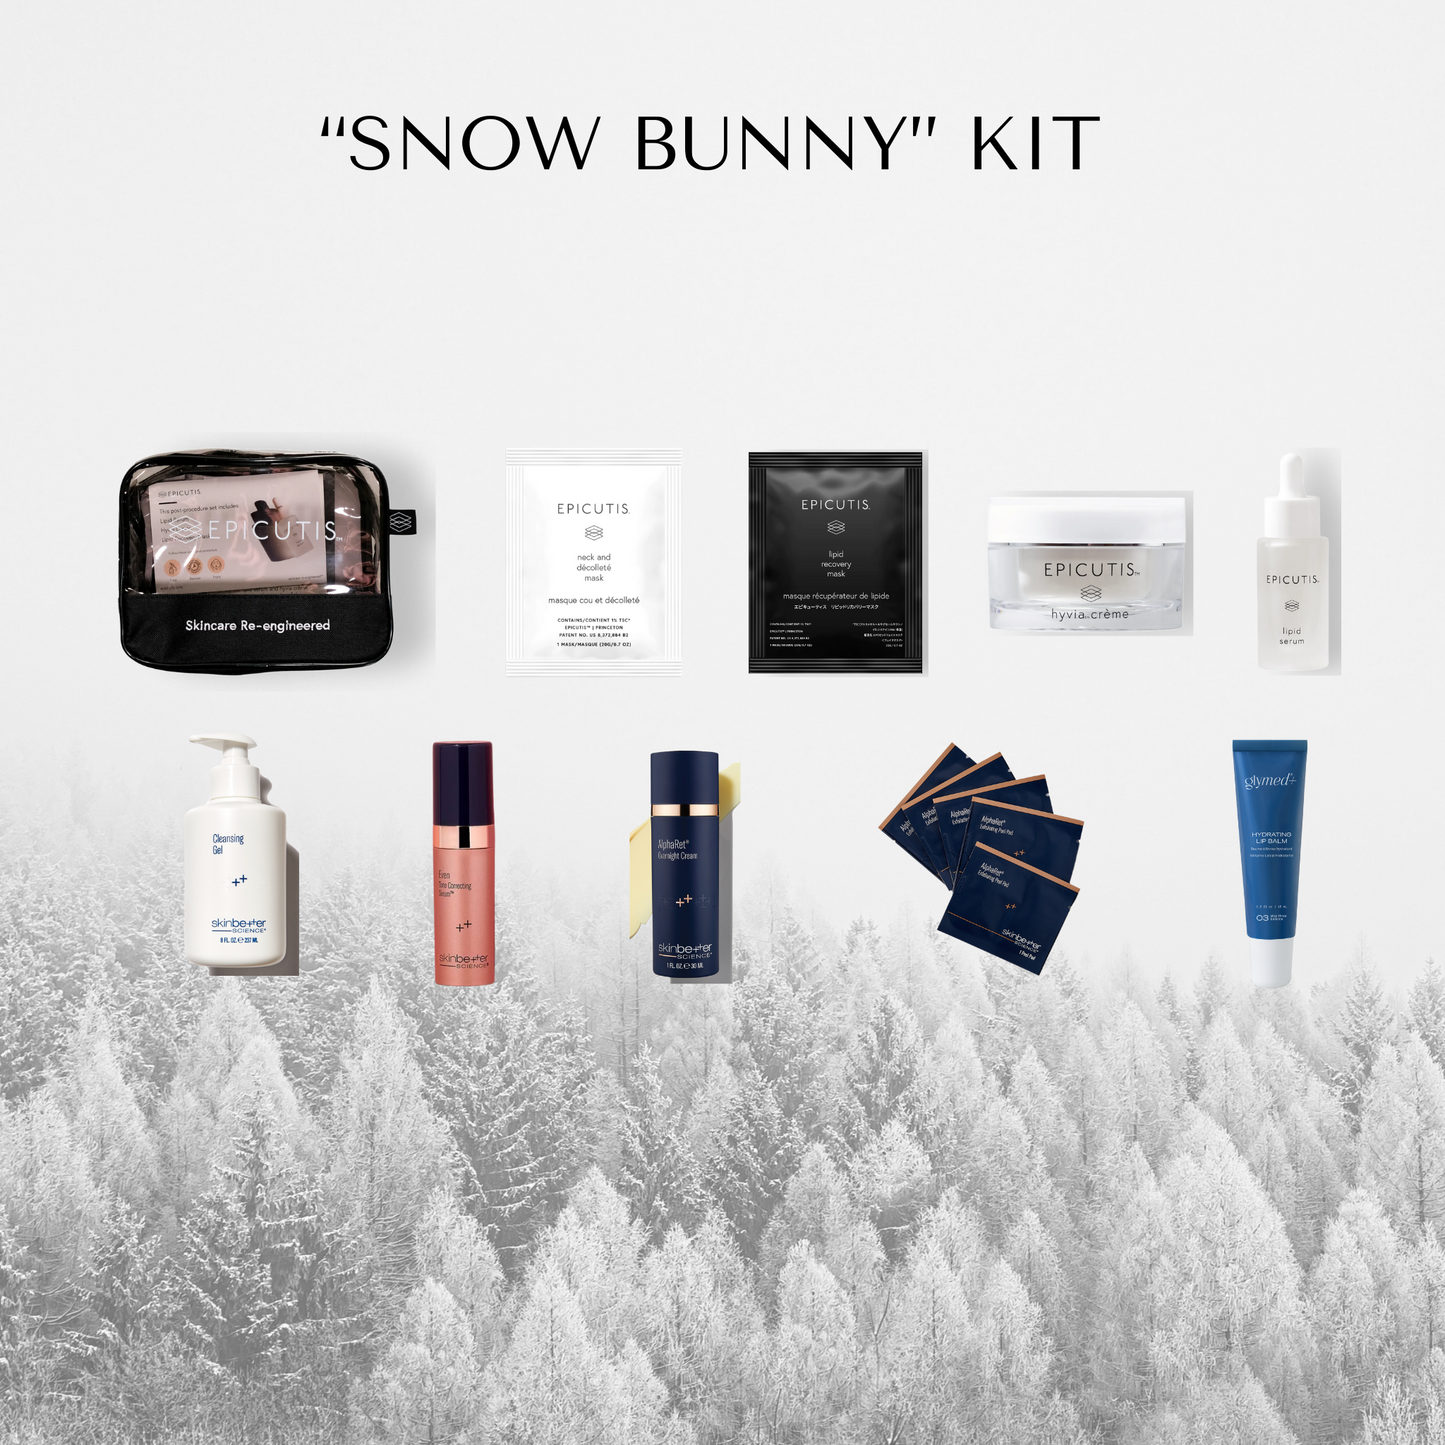 "Snow Bunny" Kit